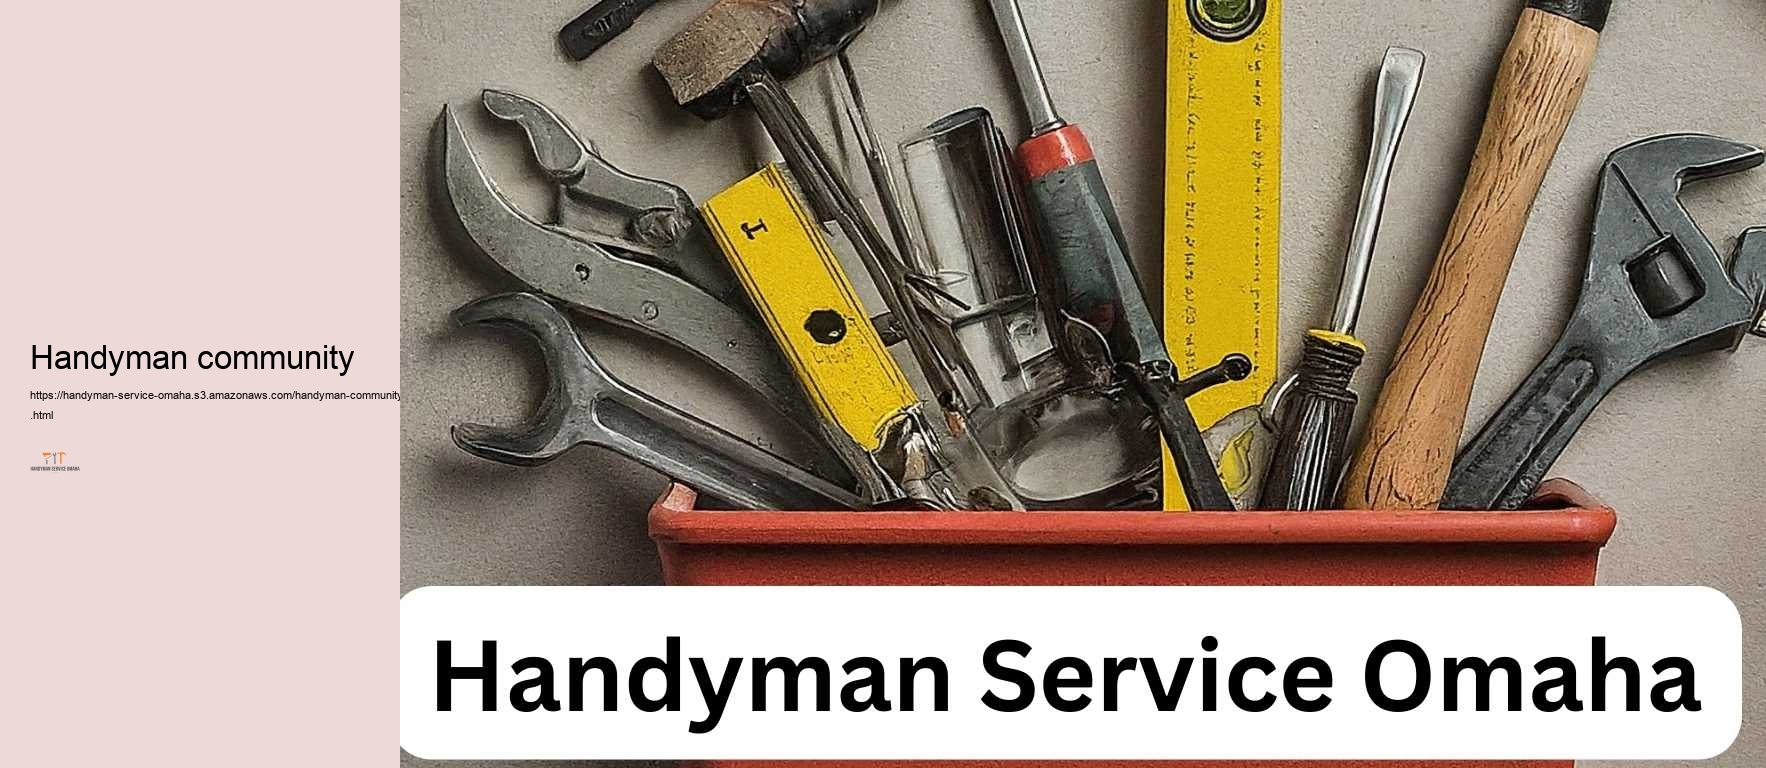 Handyman community